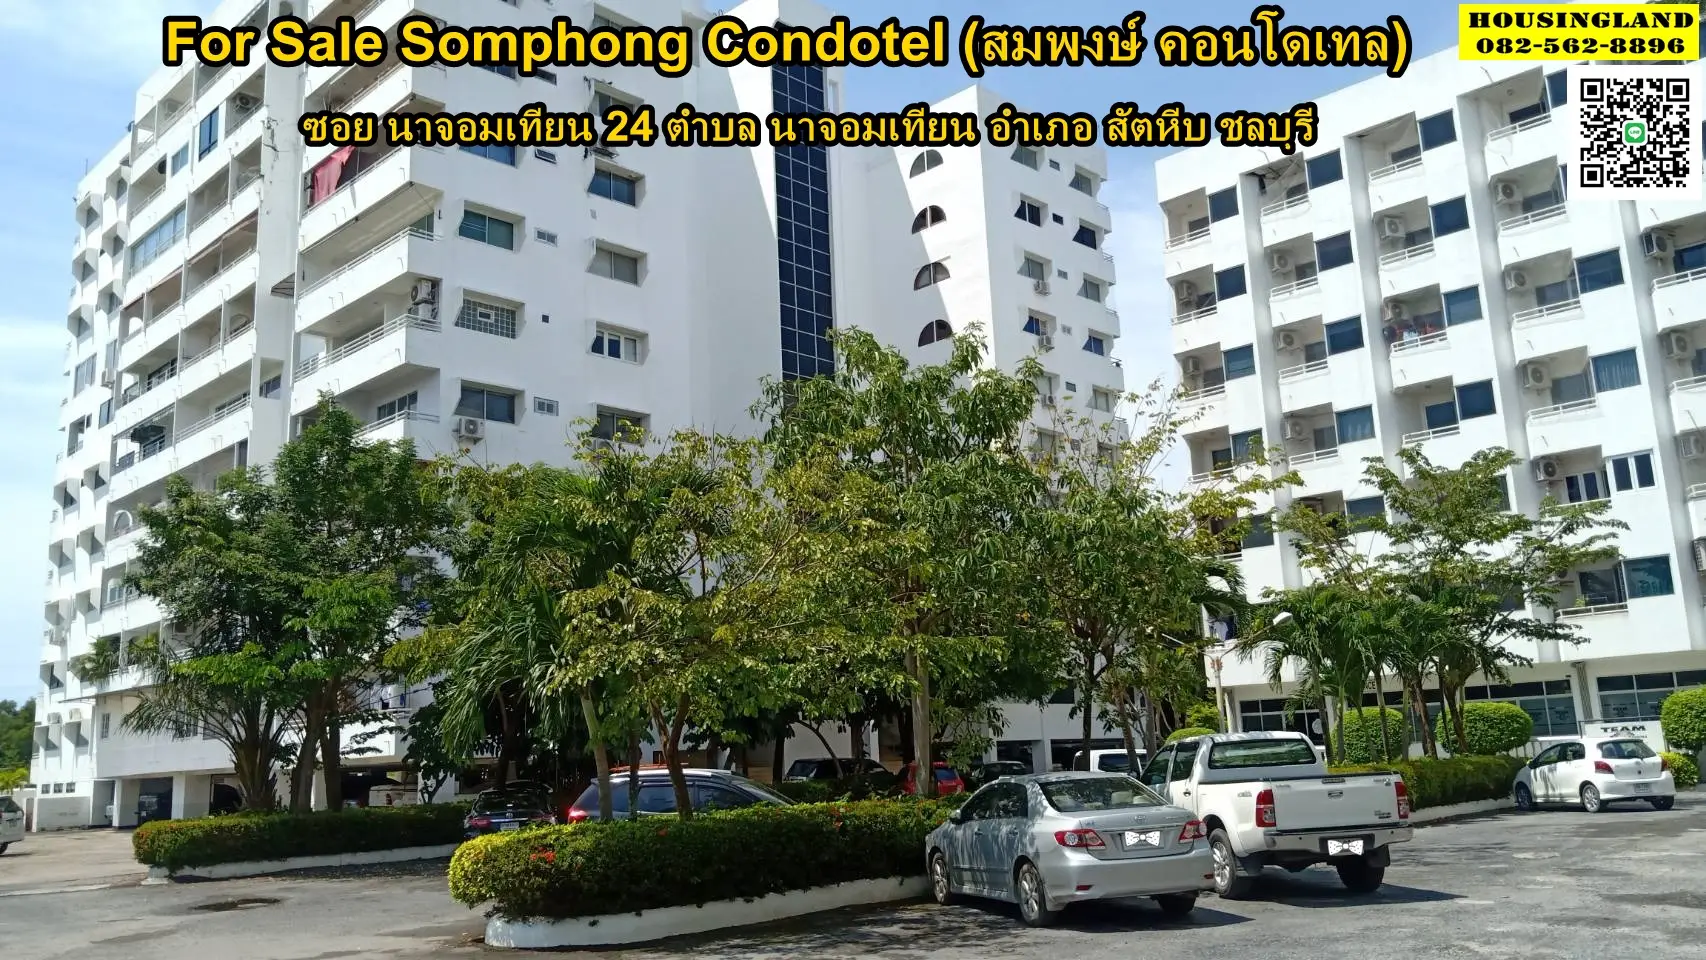 Condo for sale, Somphong Condotel (Sompong Condotel), Soi Na Jomtien 24, Na Jomtien Subdistrict, Sattahip District, Chonburi